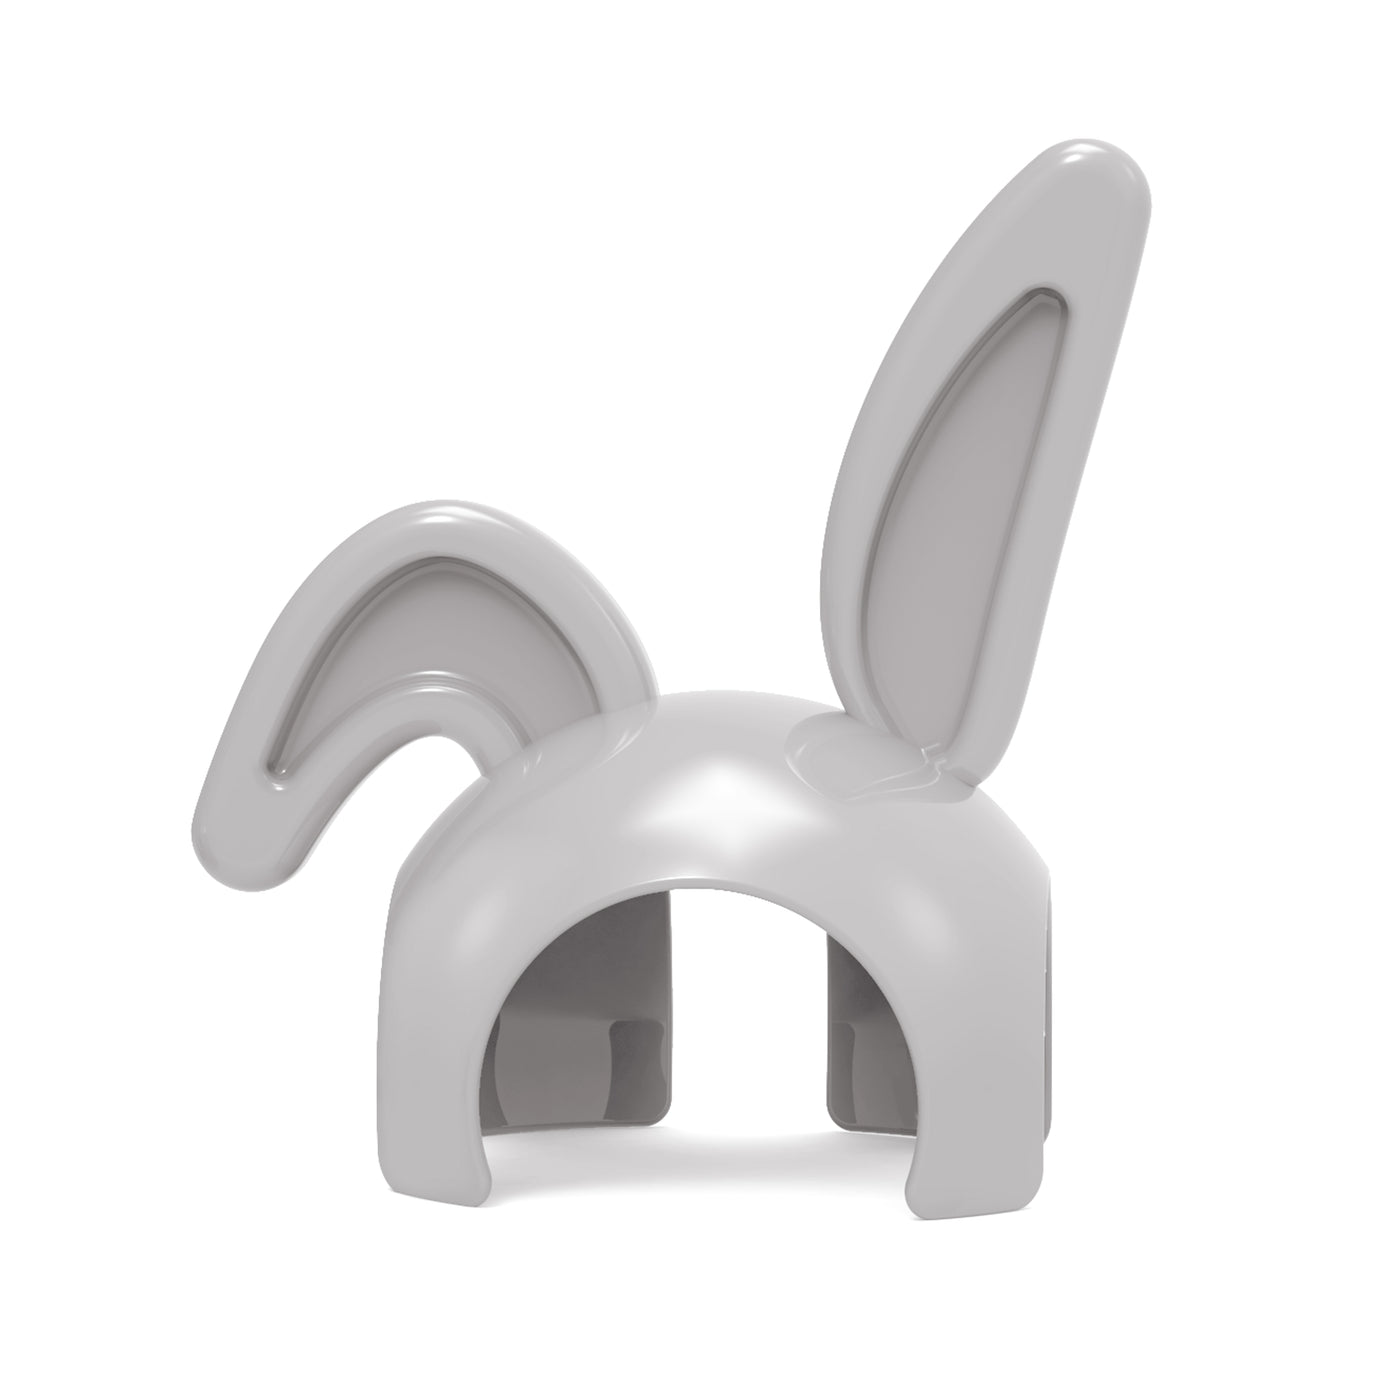 Alecto DIVM-EARS - Kaninchenohren-Accessoire für SMARTBABY10 & DIVM-850, grau/grün